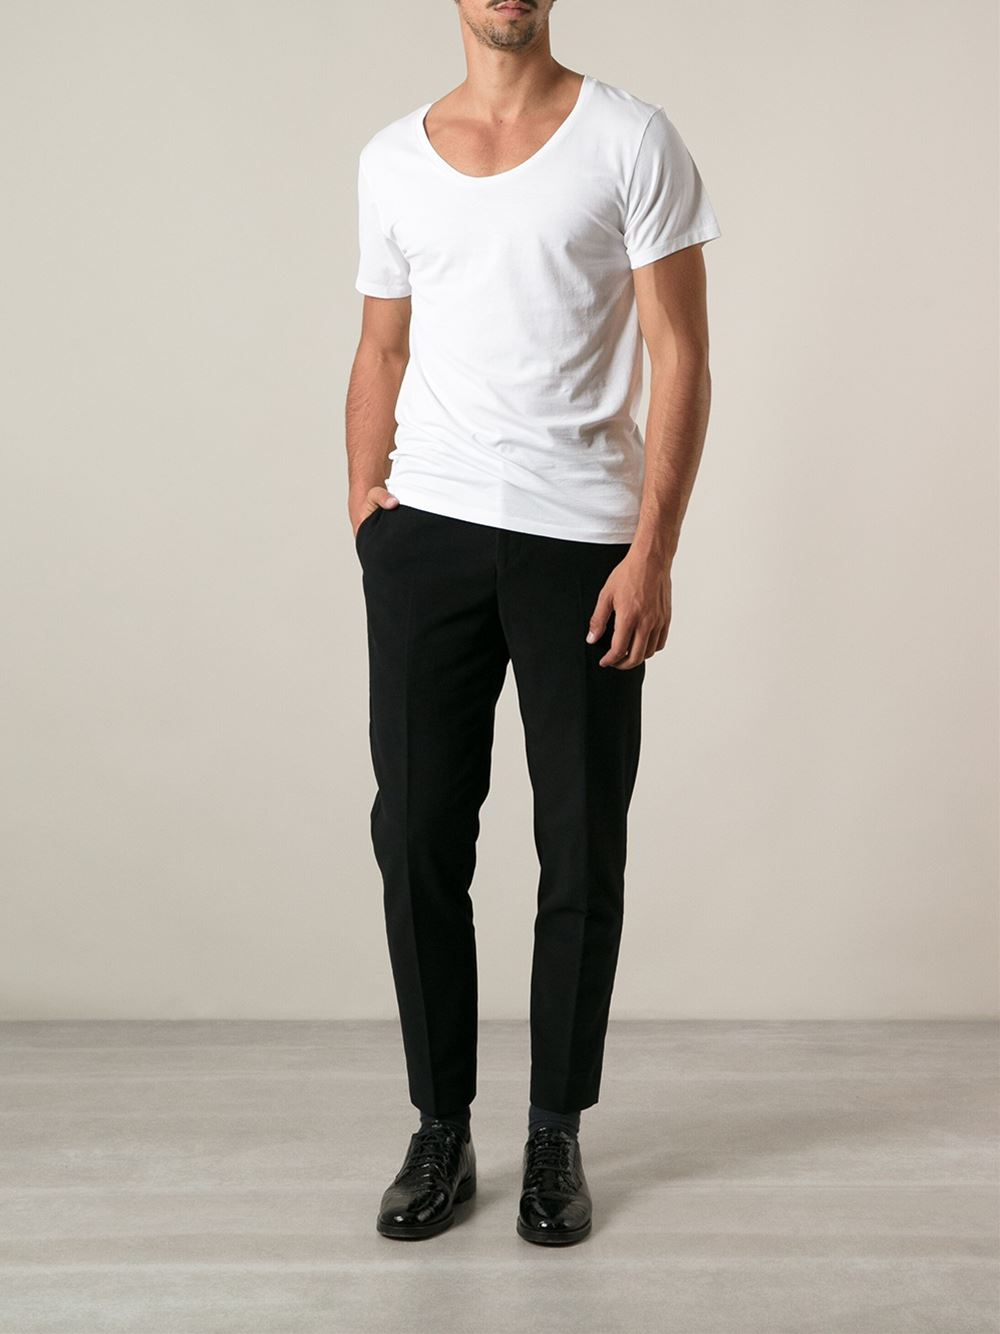 Acne Studios Limit Tshirt in White for Men - Lyst